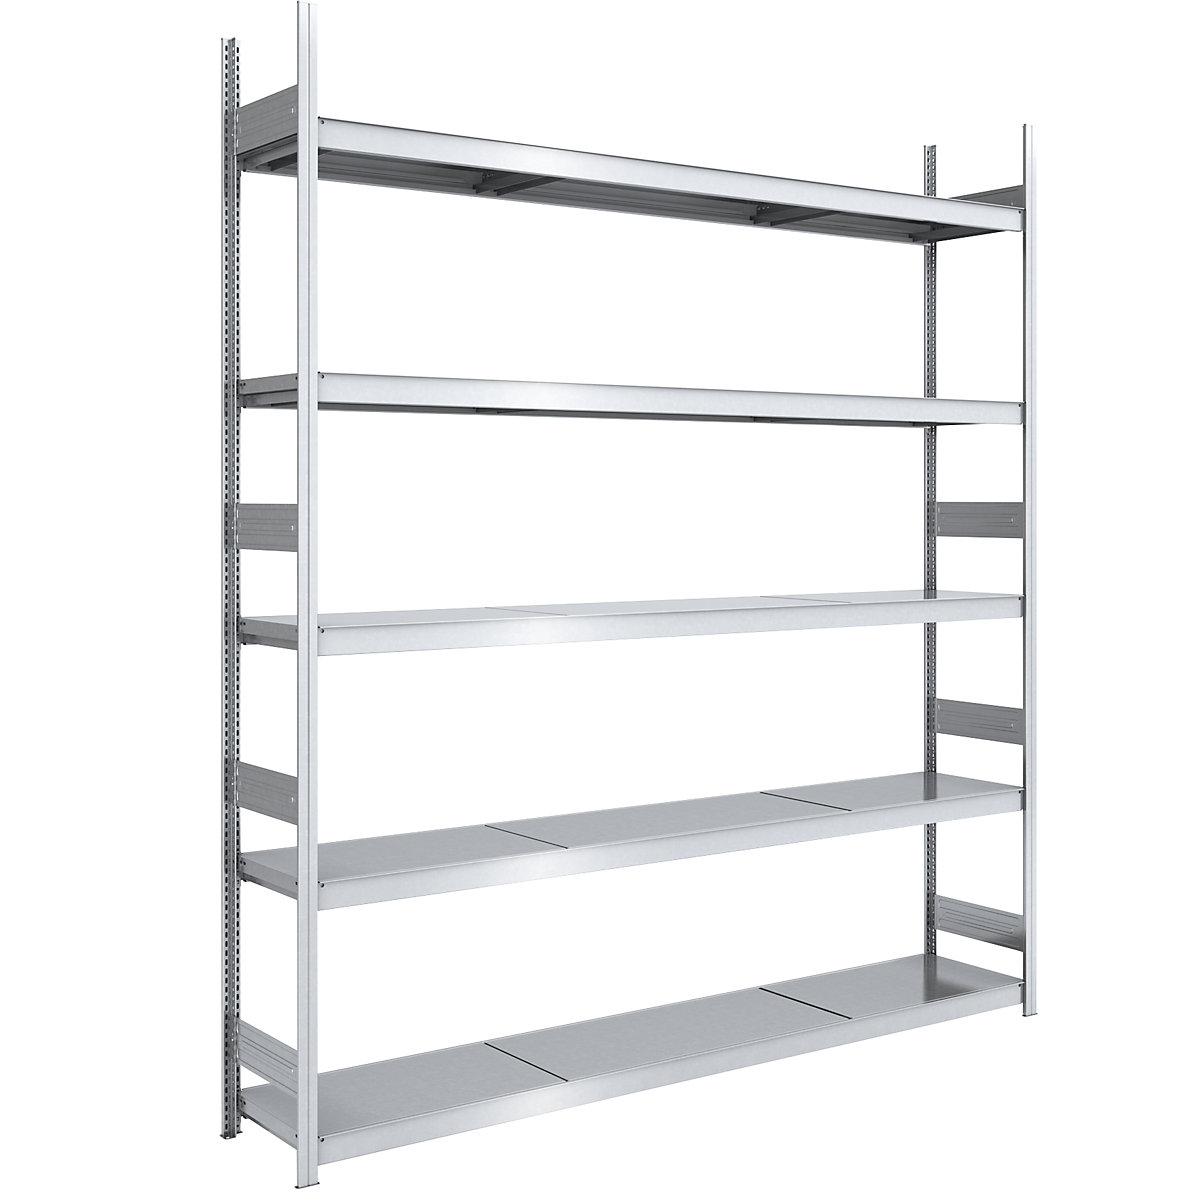 Wide span boltless shelving unit with steel shelves – hofe, height 3000 mm, shelf width 2500 mm, shelf depth 500 mm, standard shelf unit